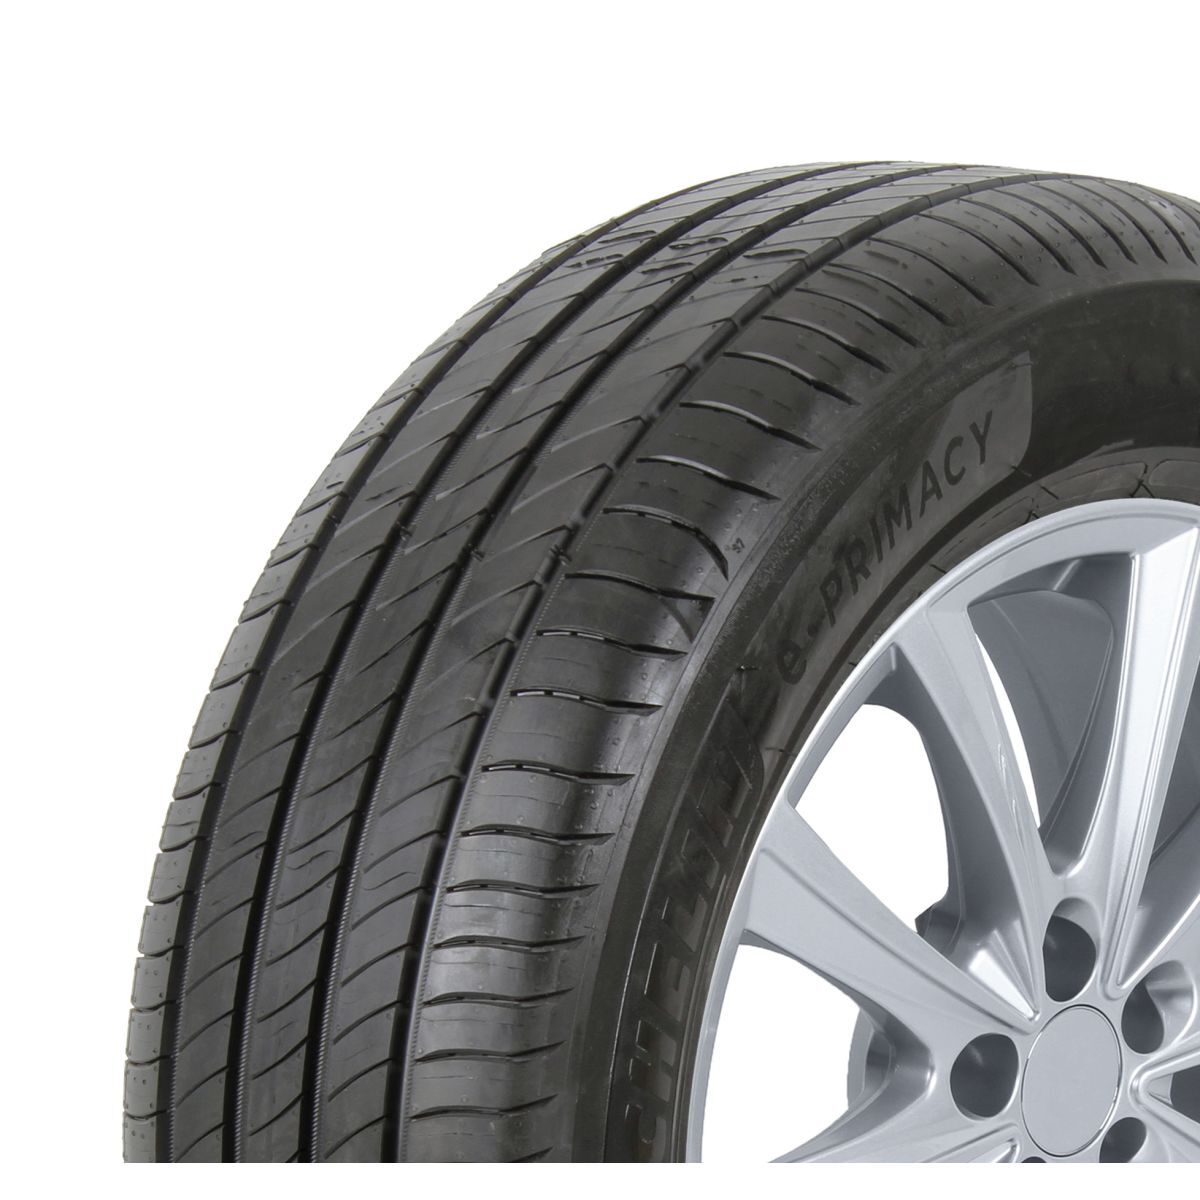 Neumáticos de verano MICHELIN E Primacy 205/60R16 92H